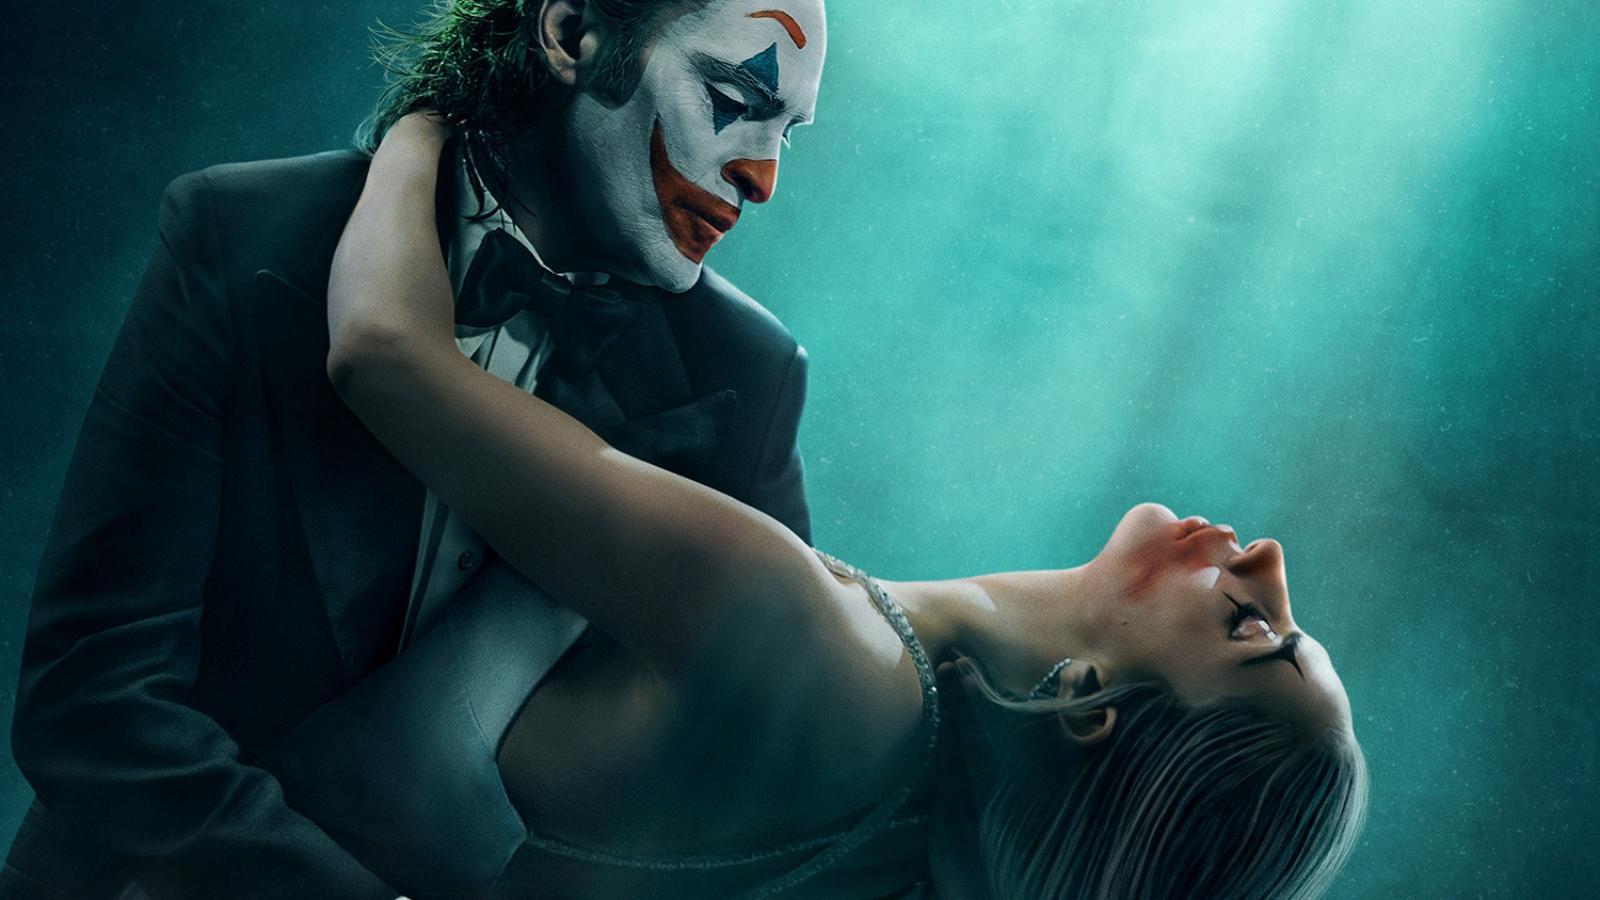 Joaquin Phoenix and Lady Gaga as Joker and Harley Quinn in Joker 2 poster